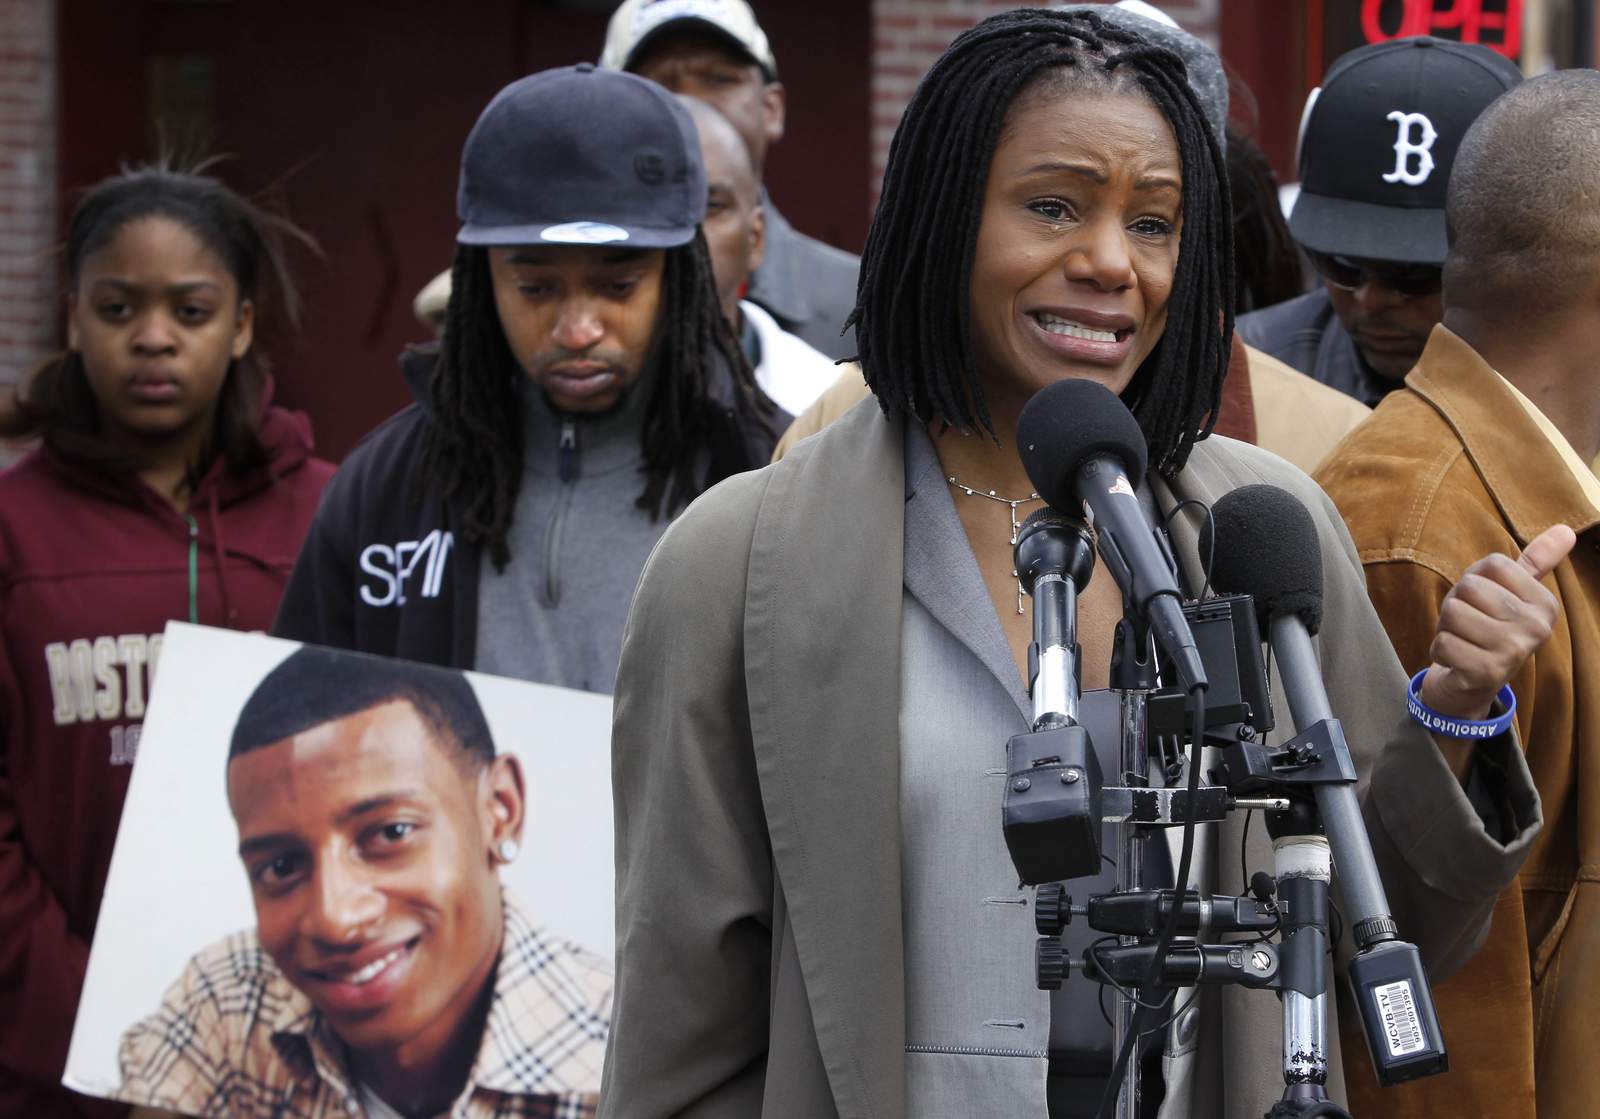 Jay-Z, other celebs ask feds to probe student's 2010 killing